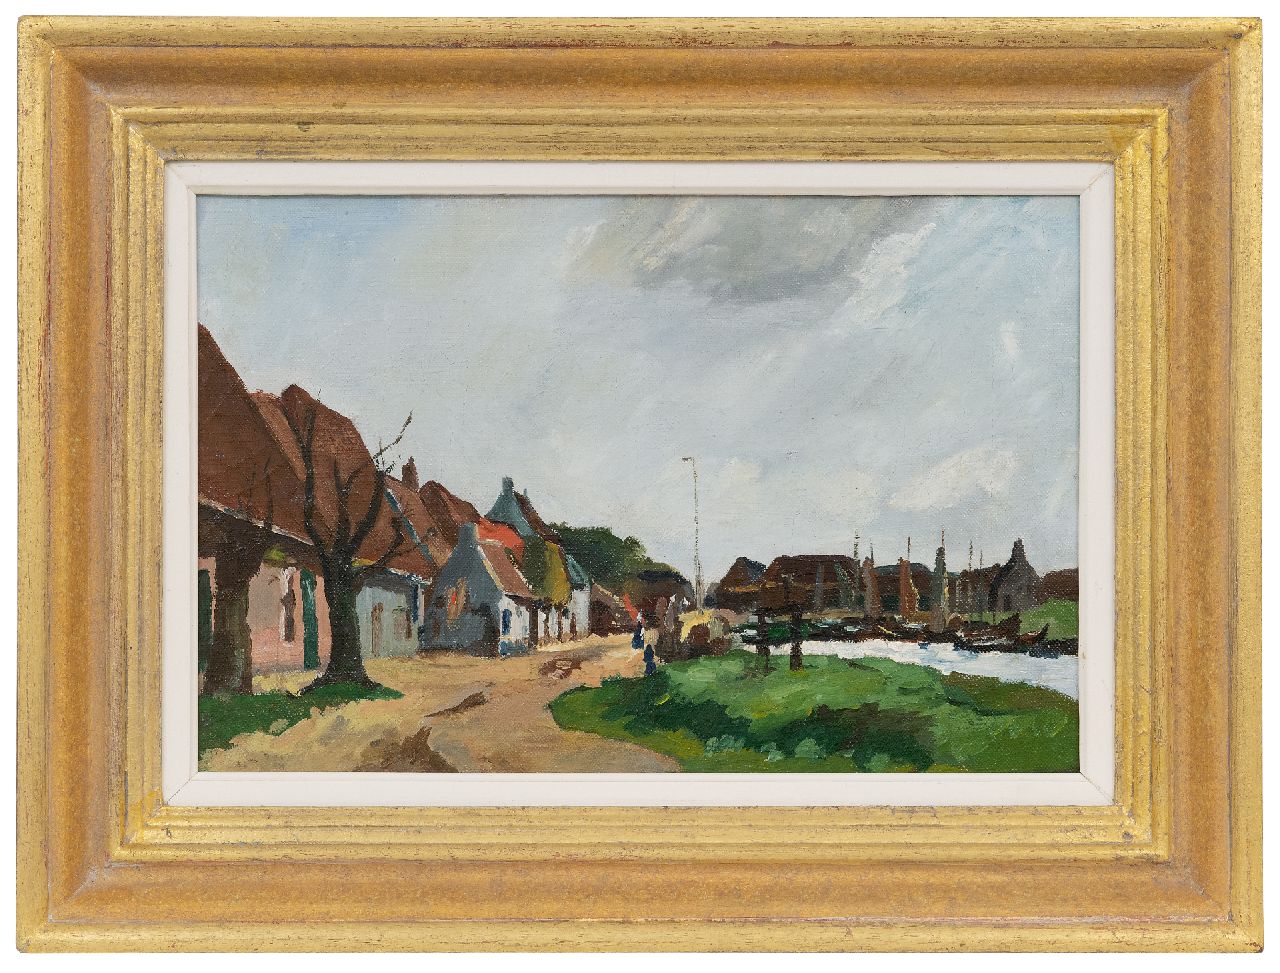 Vuuren J. van | Jan van Vuuren | Gemälde zum Verkauf angeboten | Stadtbild mit Hafen, Öl auf Leinwand 24,4 x 36,4 cm